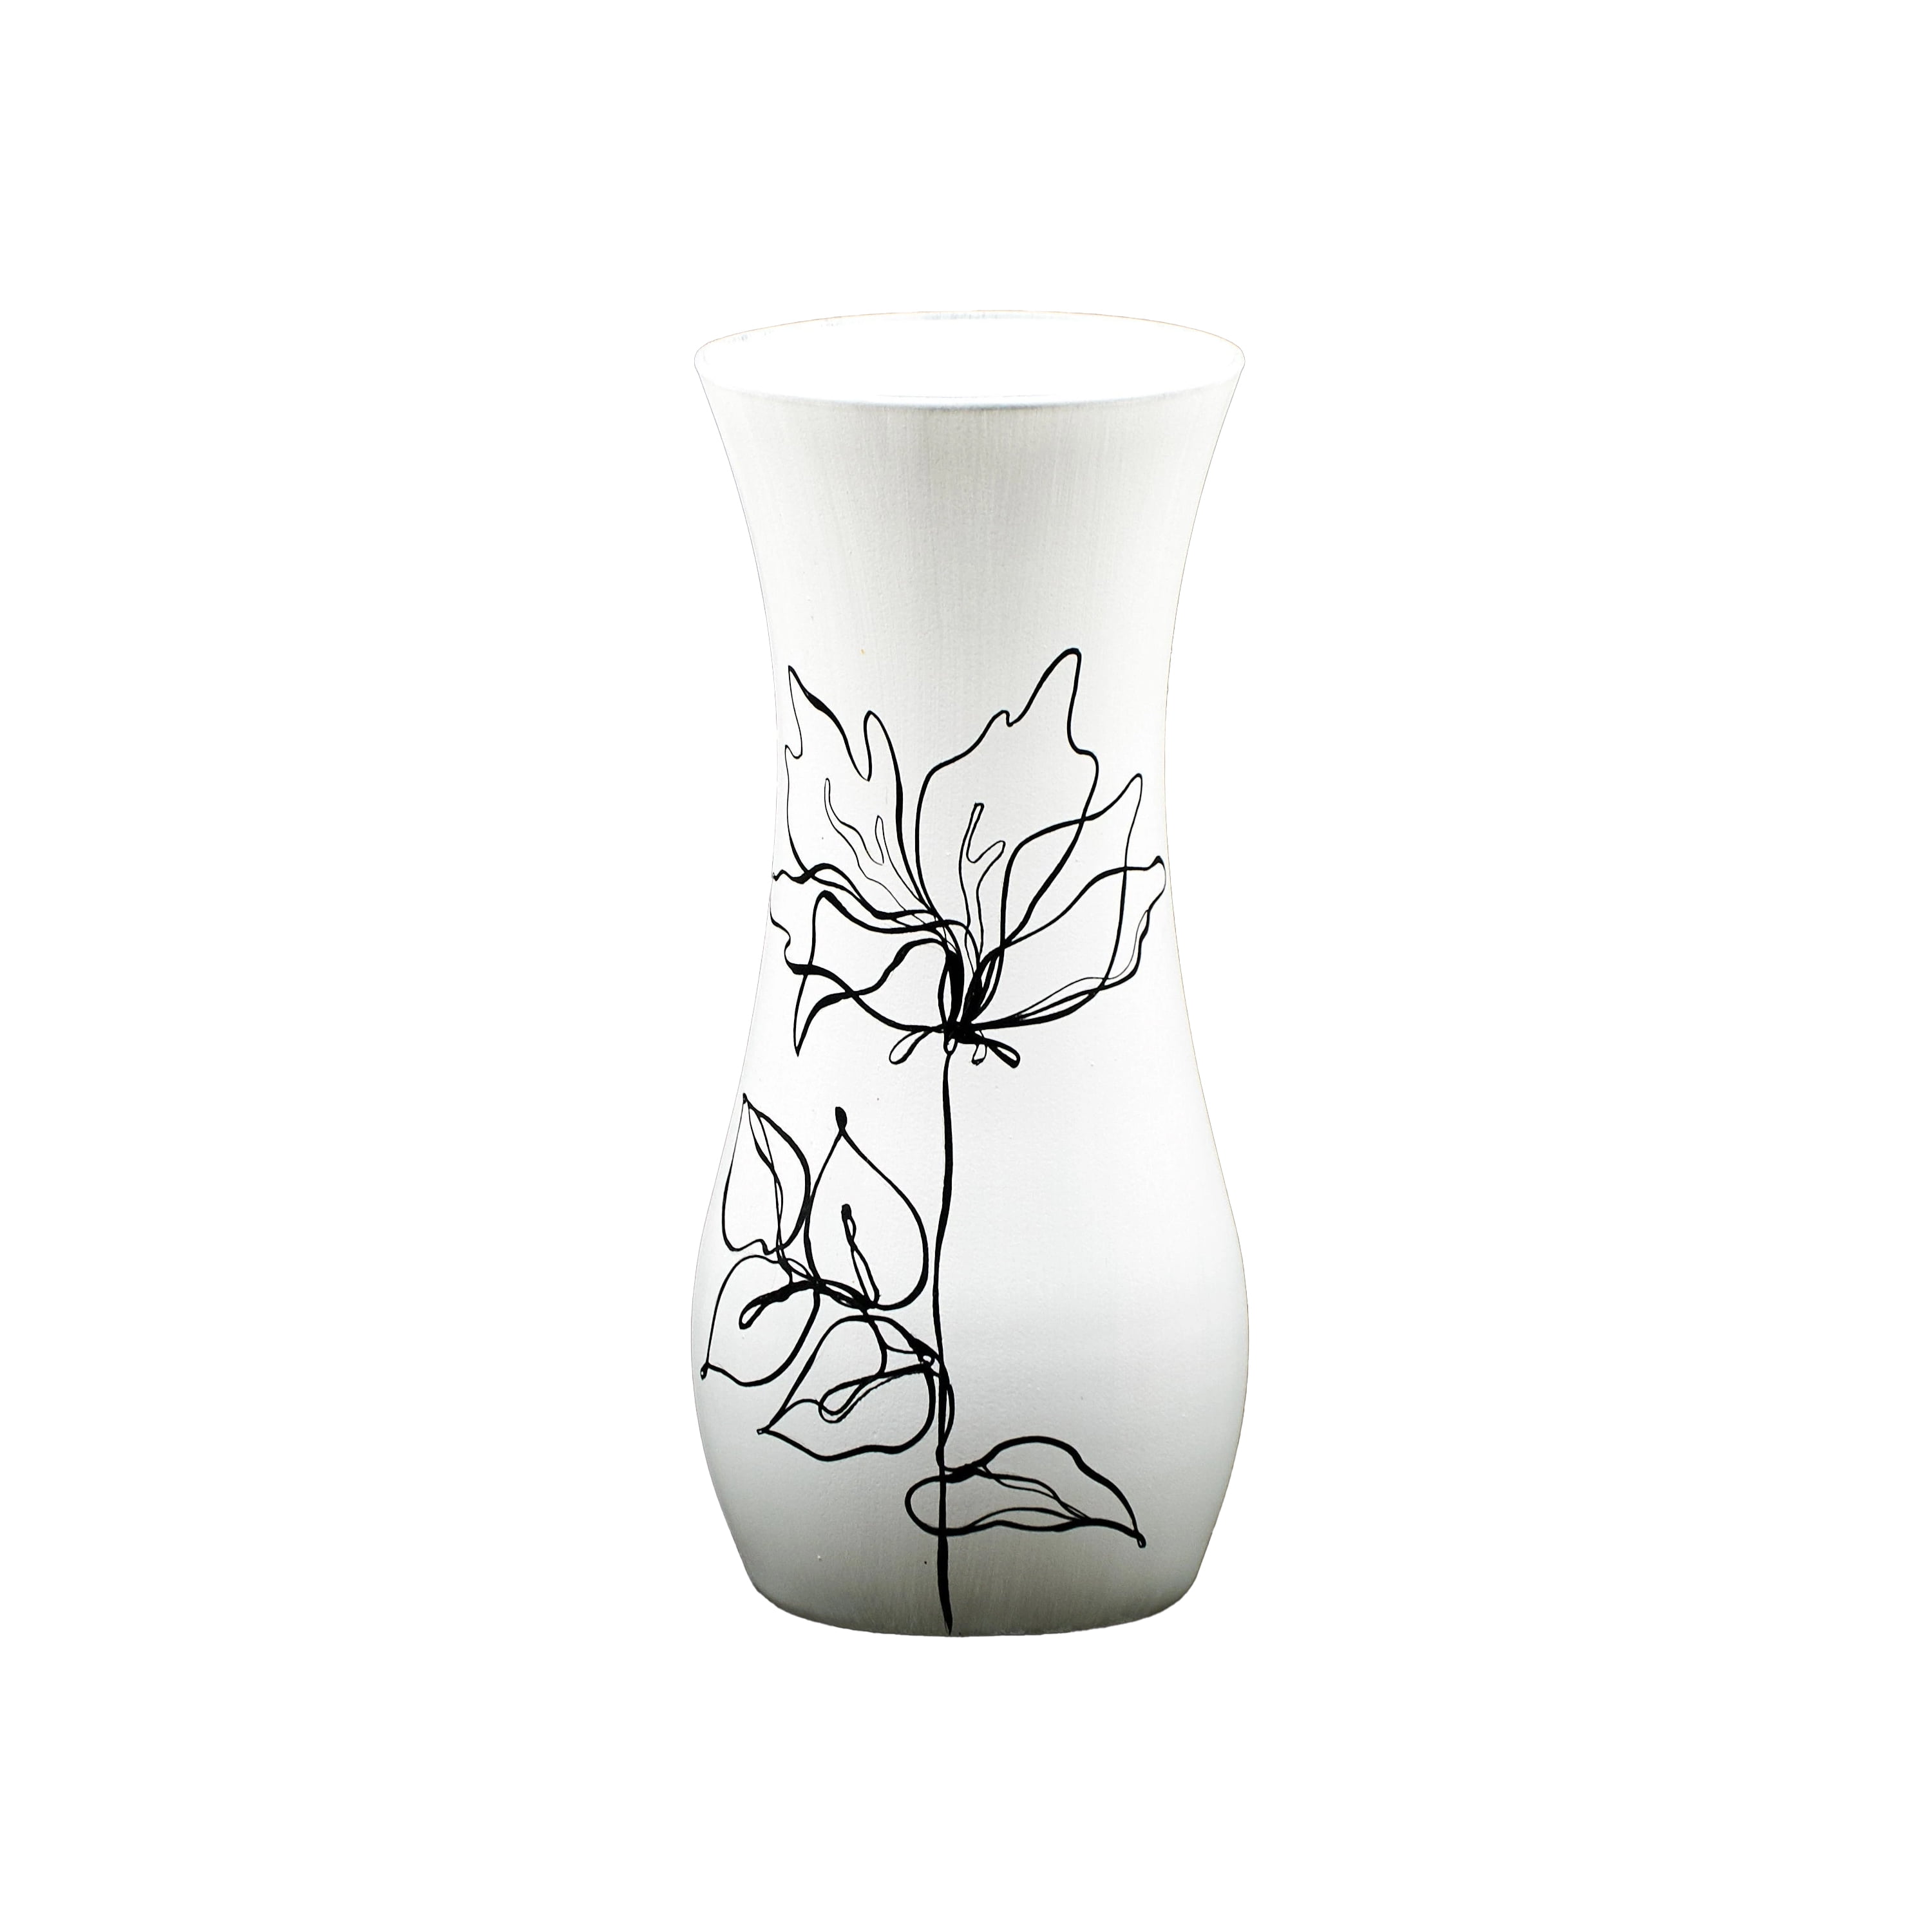 Black and white glass vase for flowers handpainted art round bubble zebra interior design home room table decor 6 inch